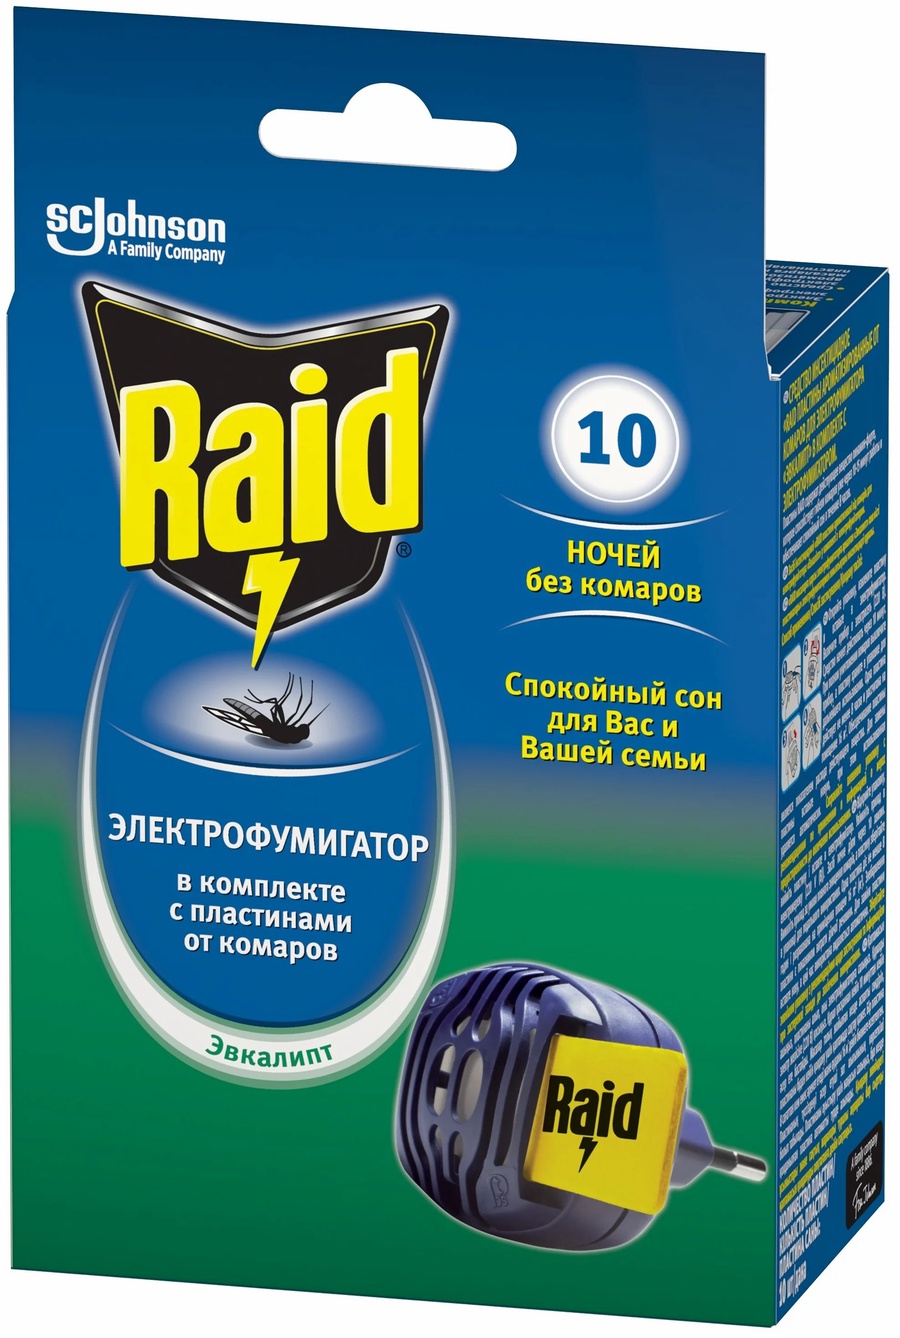 Электрофумигатор с пластинами от комаров Raid Эвкалипт 10 шт 